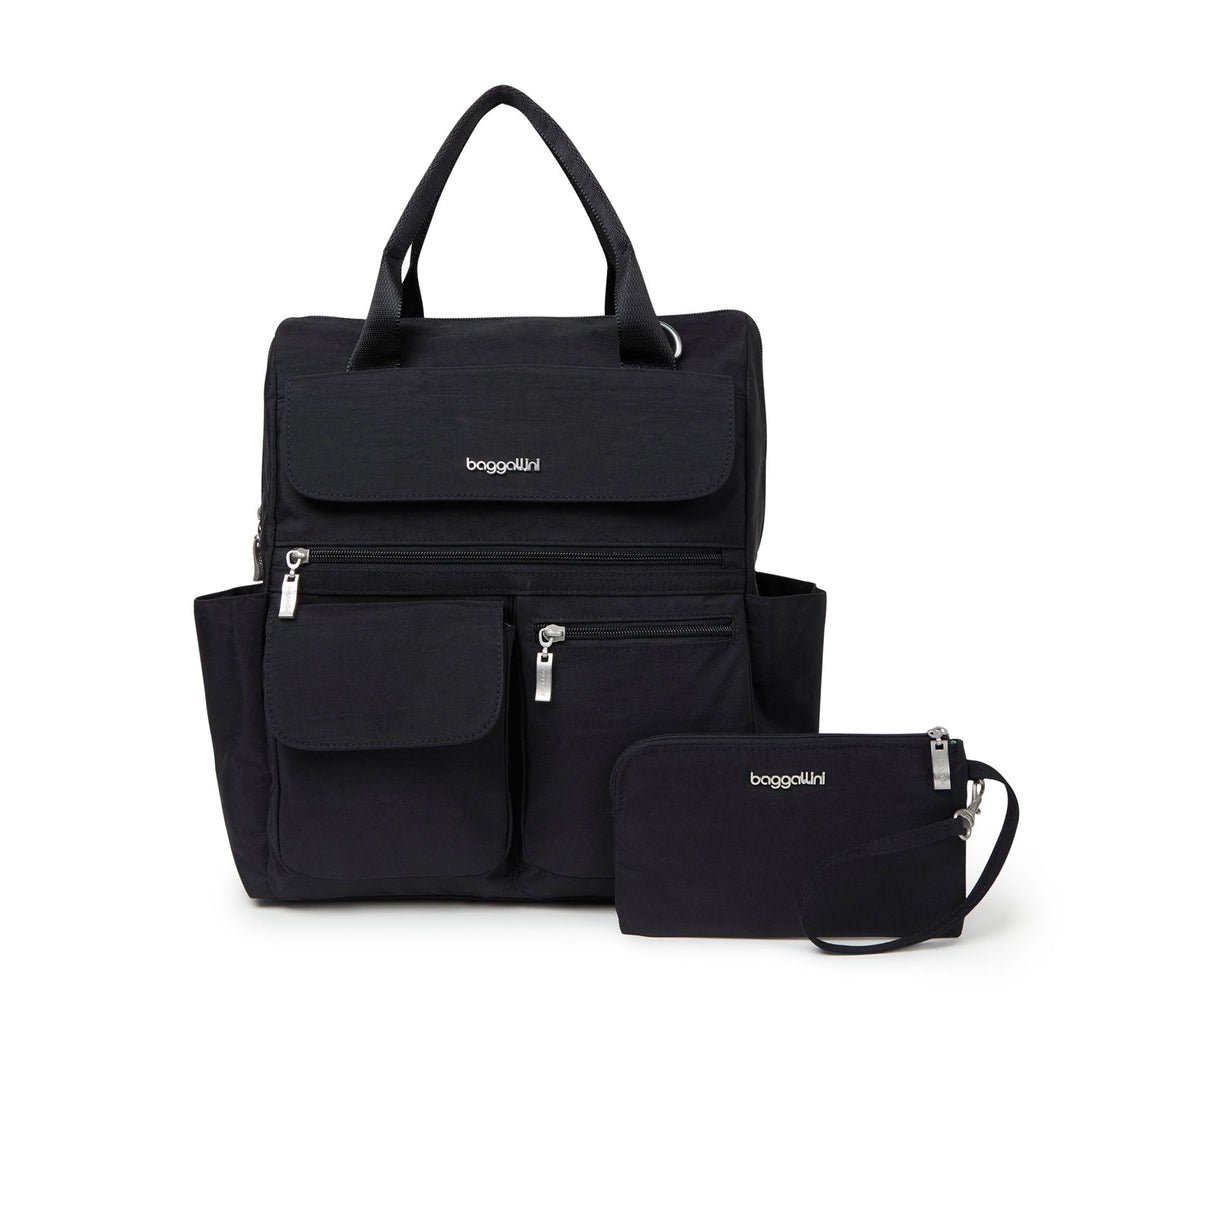 Baggallini Modern Everywhere Laptop Backpack - Black Accessories - Bags - Backpacks - The Heel Shoe Fitters